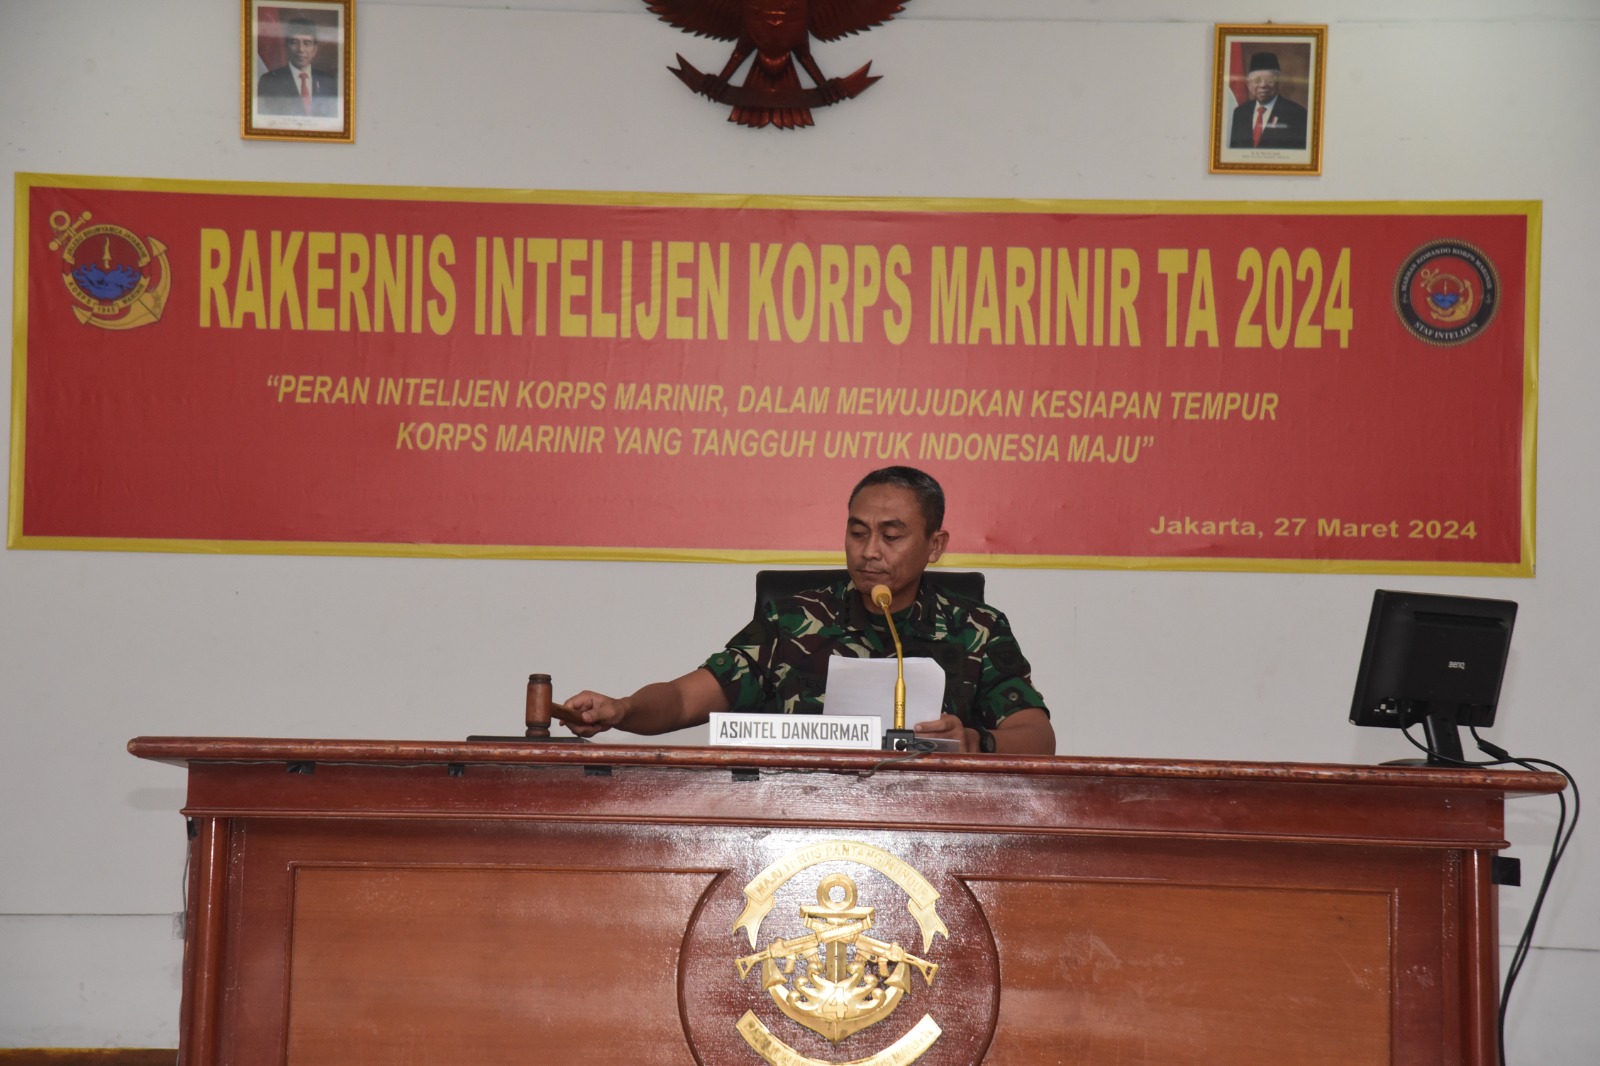 Asintel Dankormar Tutup Rakernis Intelijen Korps Marinir 2024